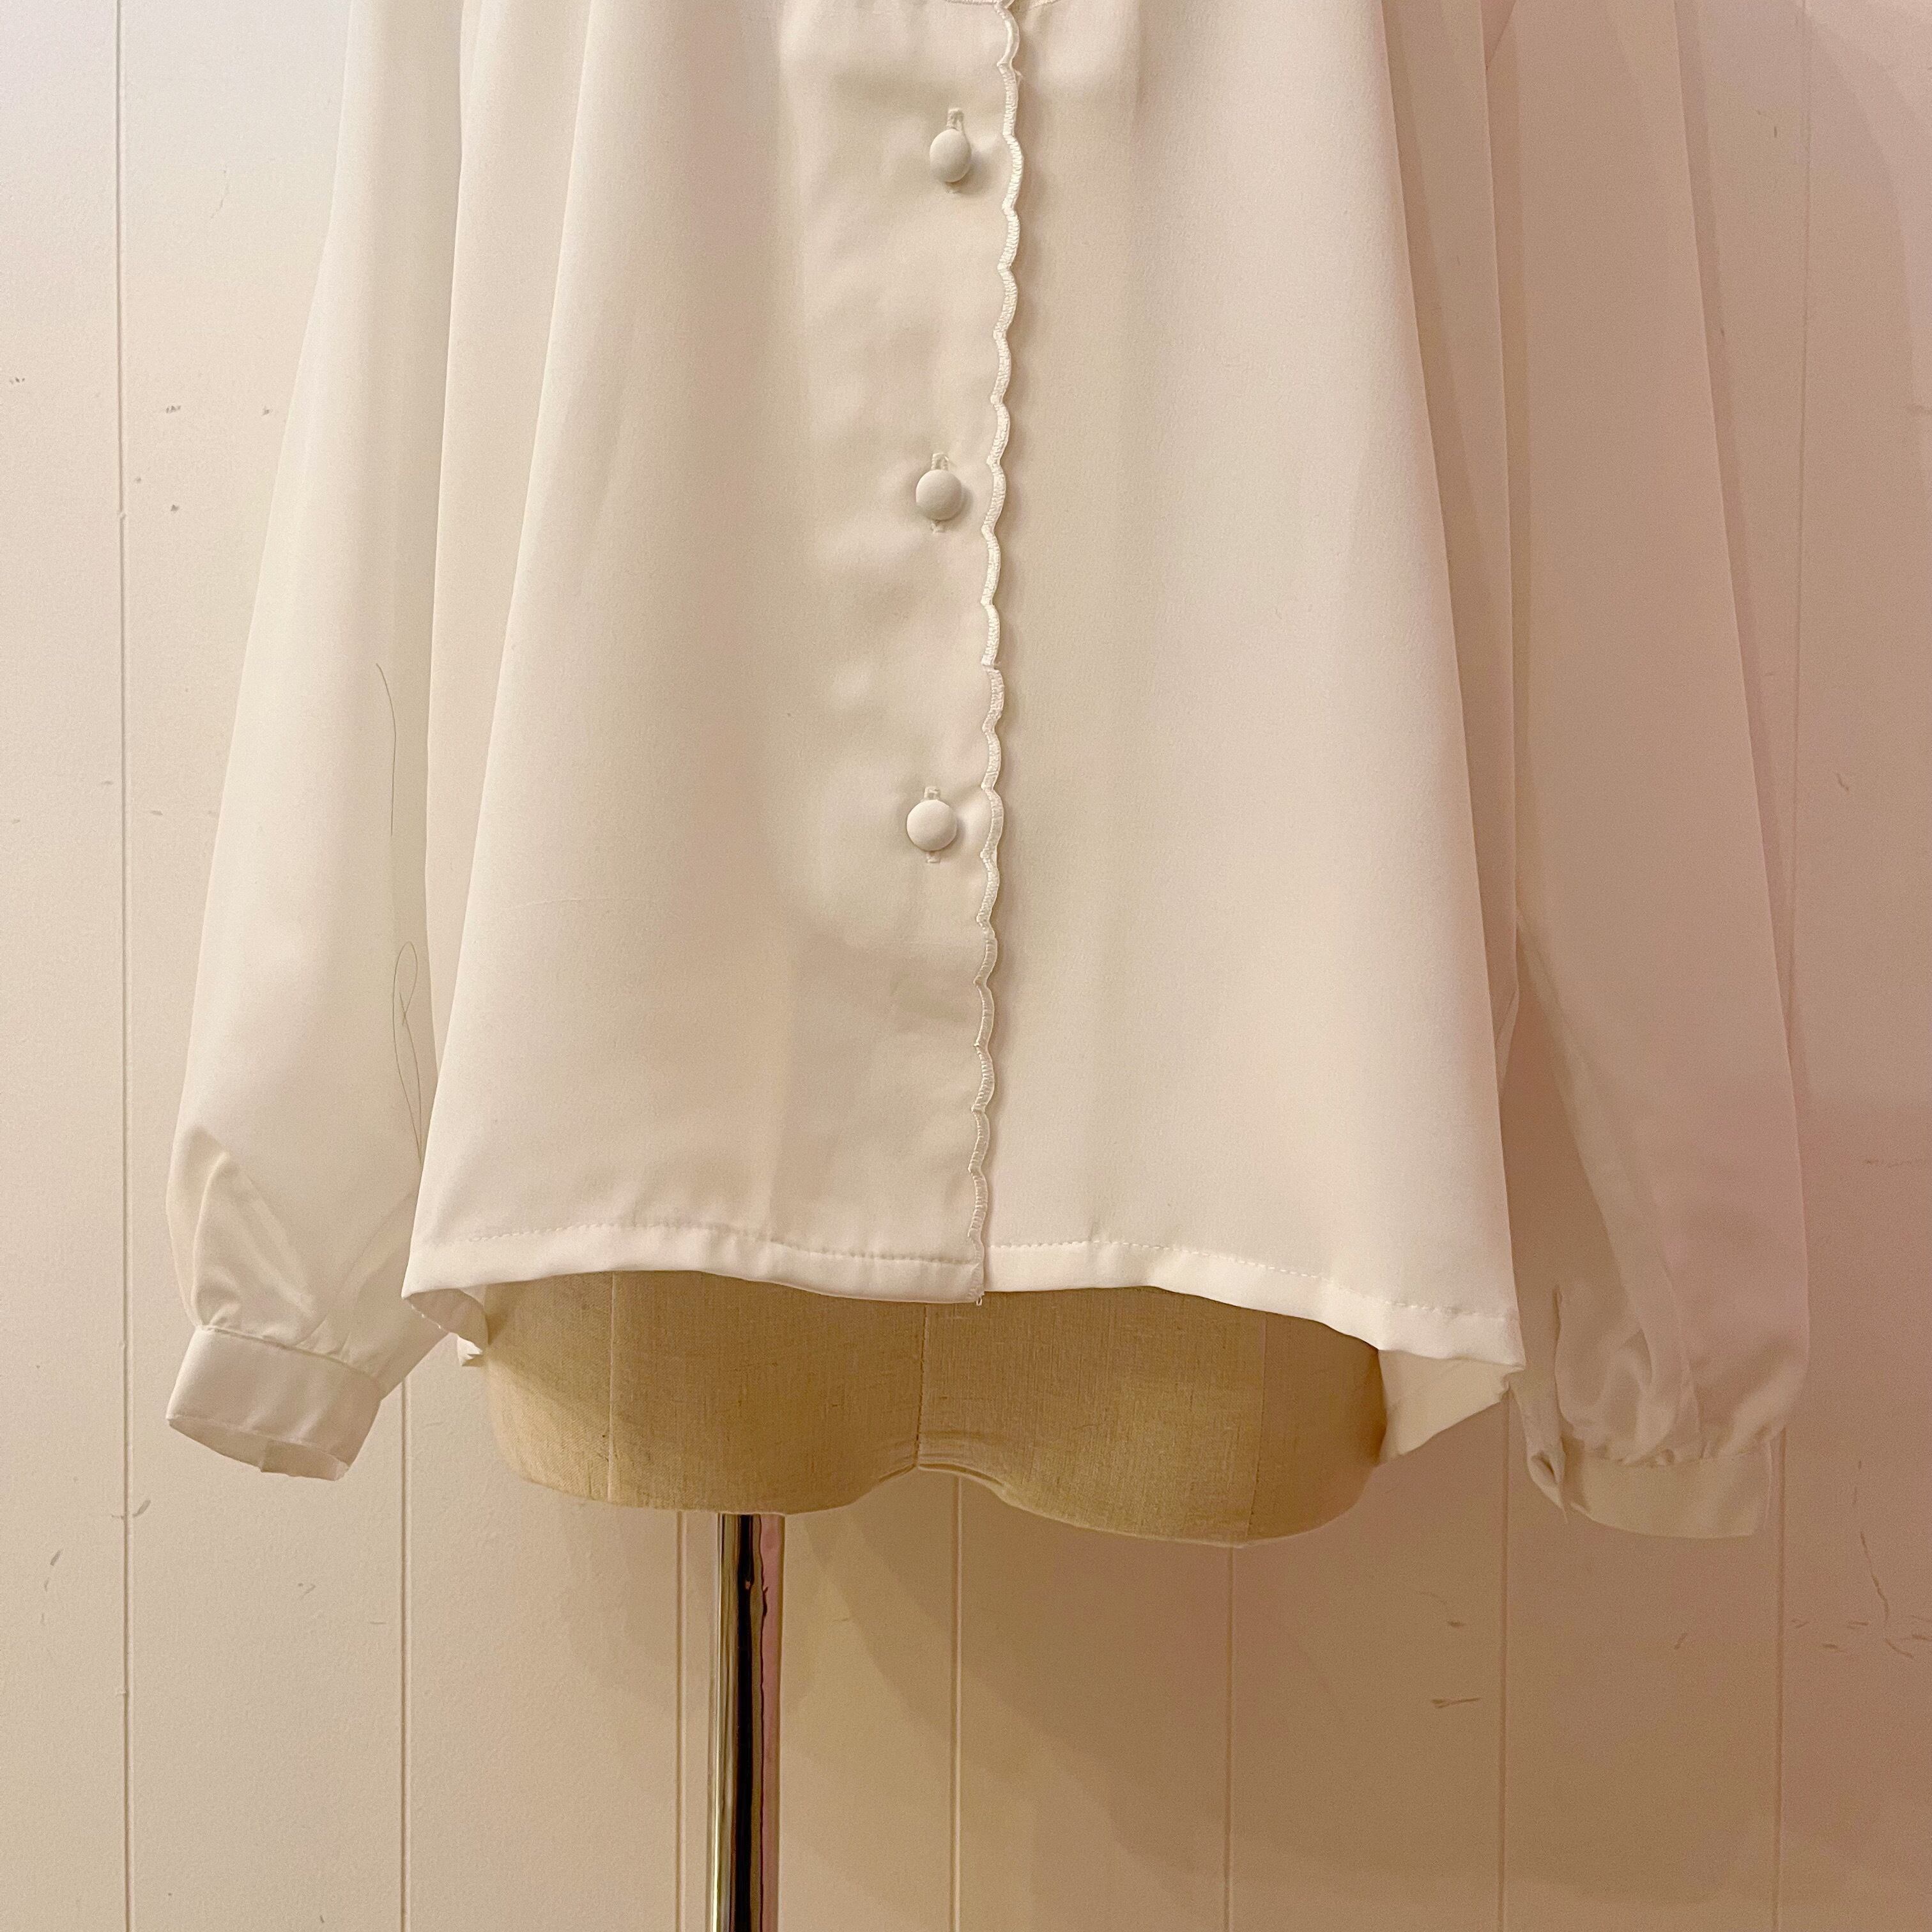 scallop embroidery white blouse